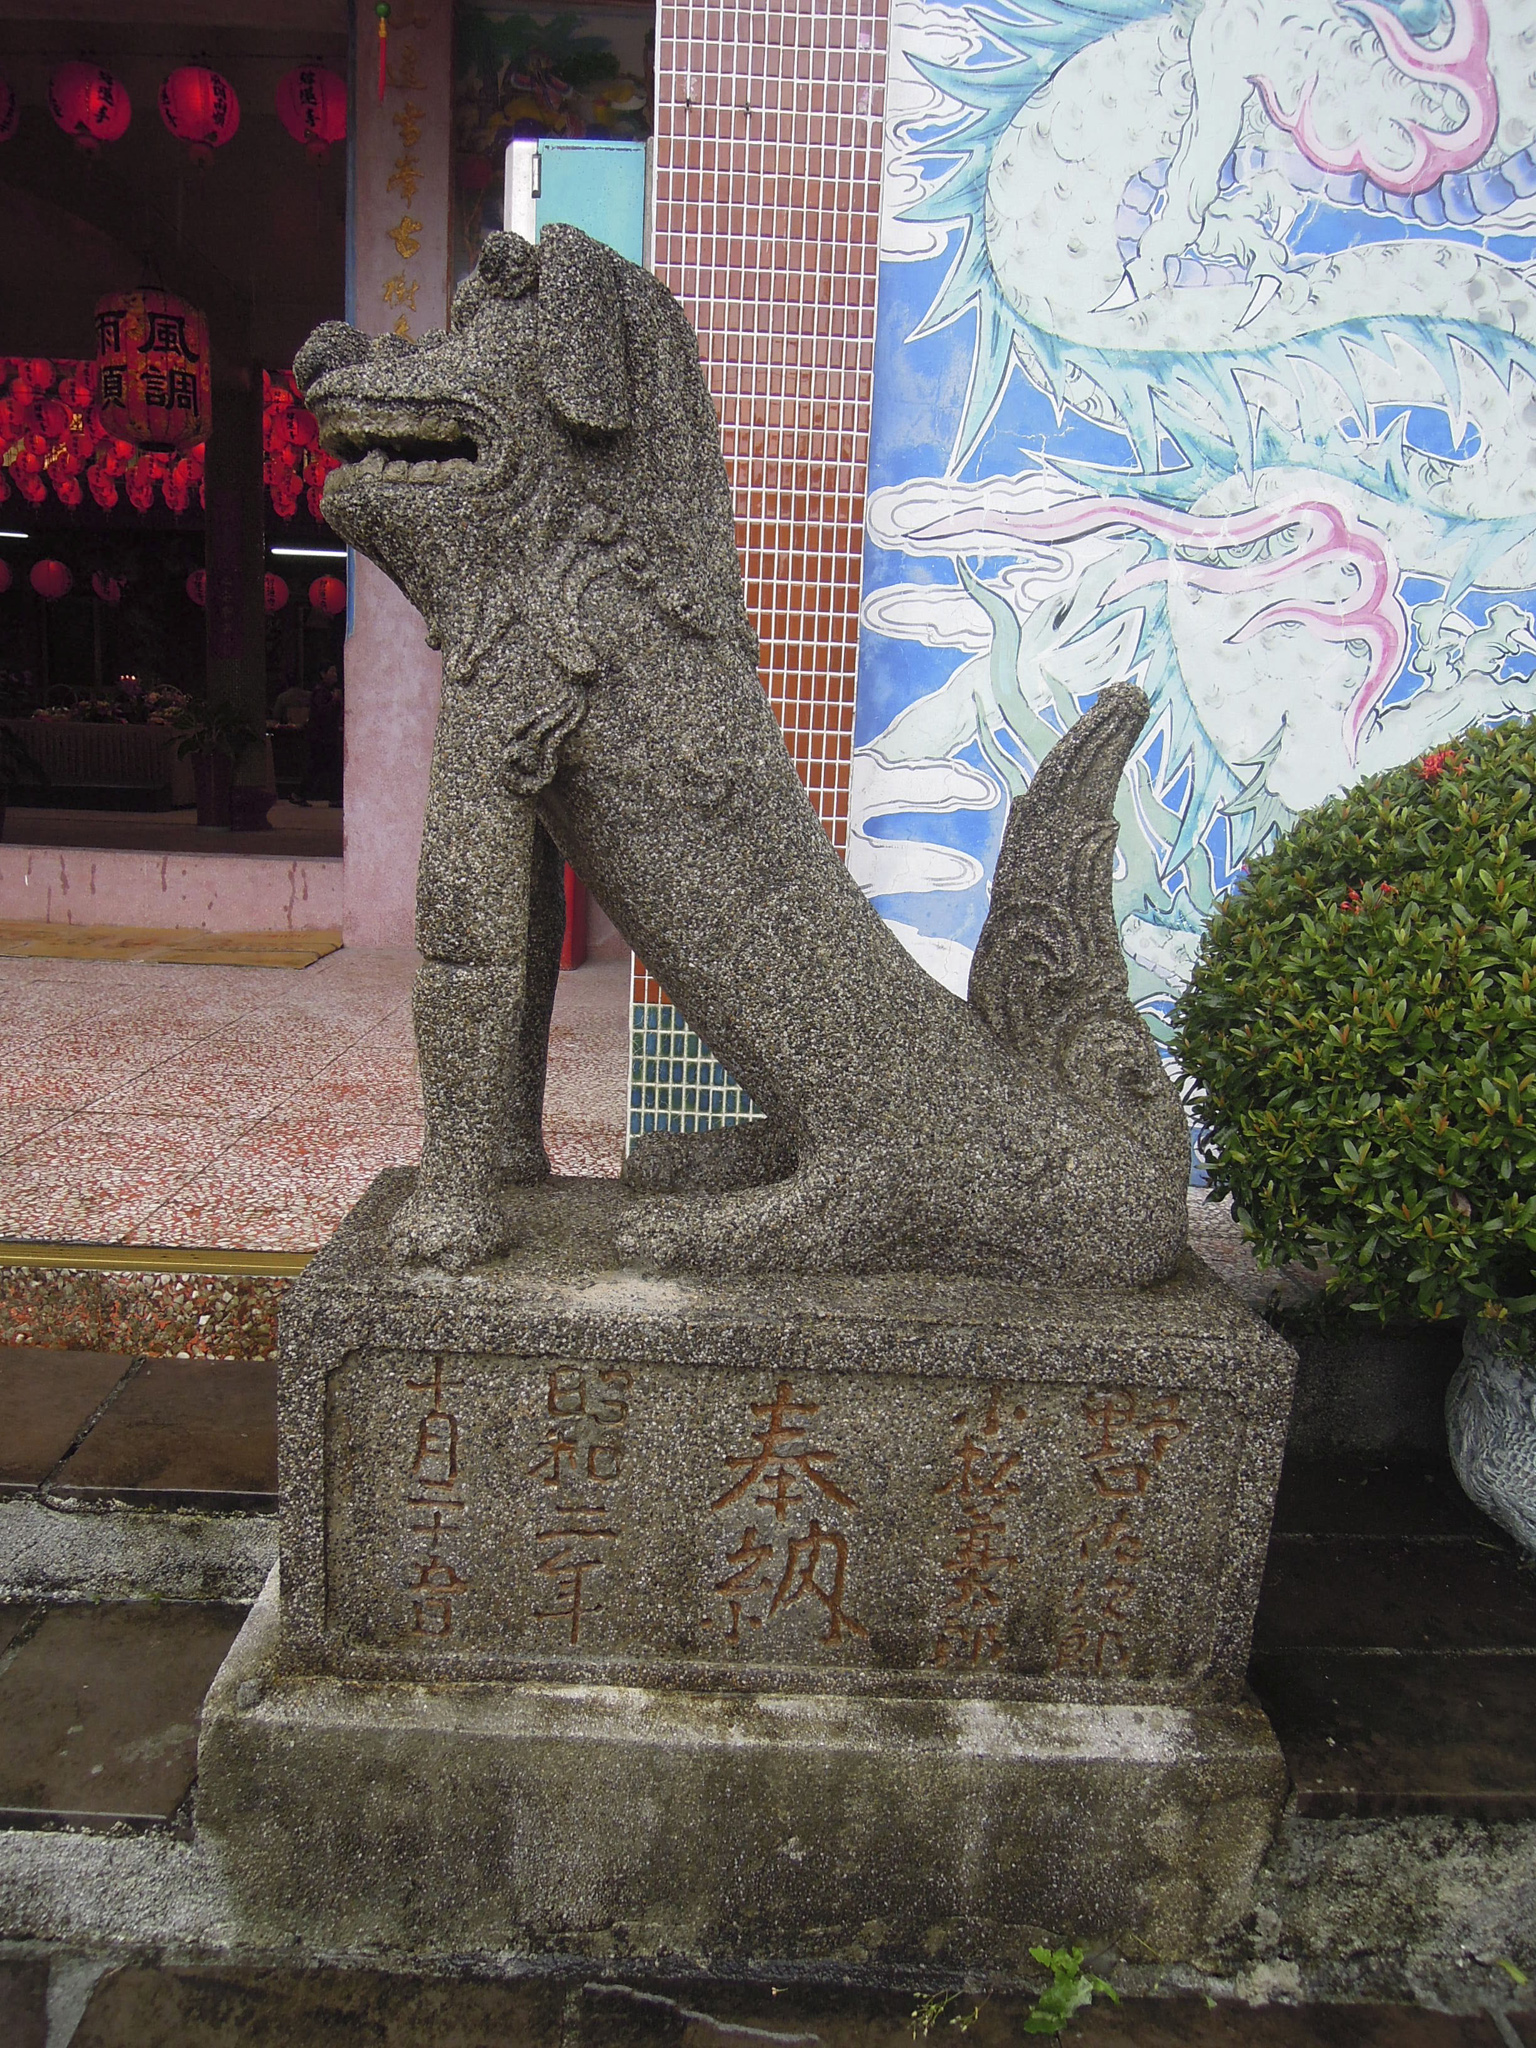 Fengtian Bilian Temple